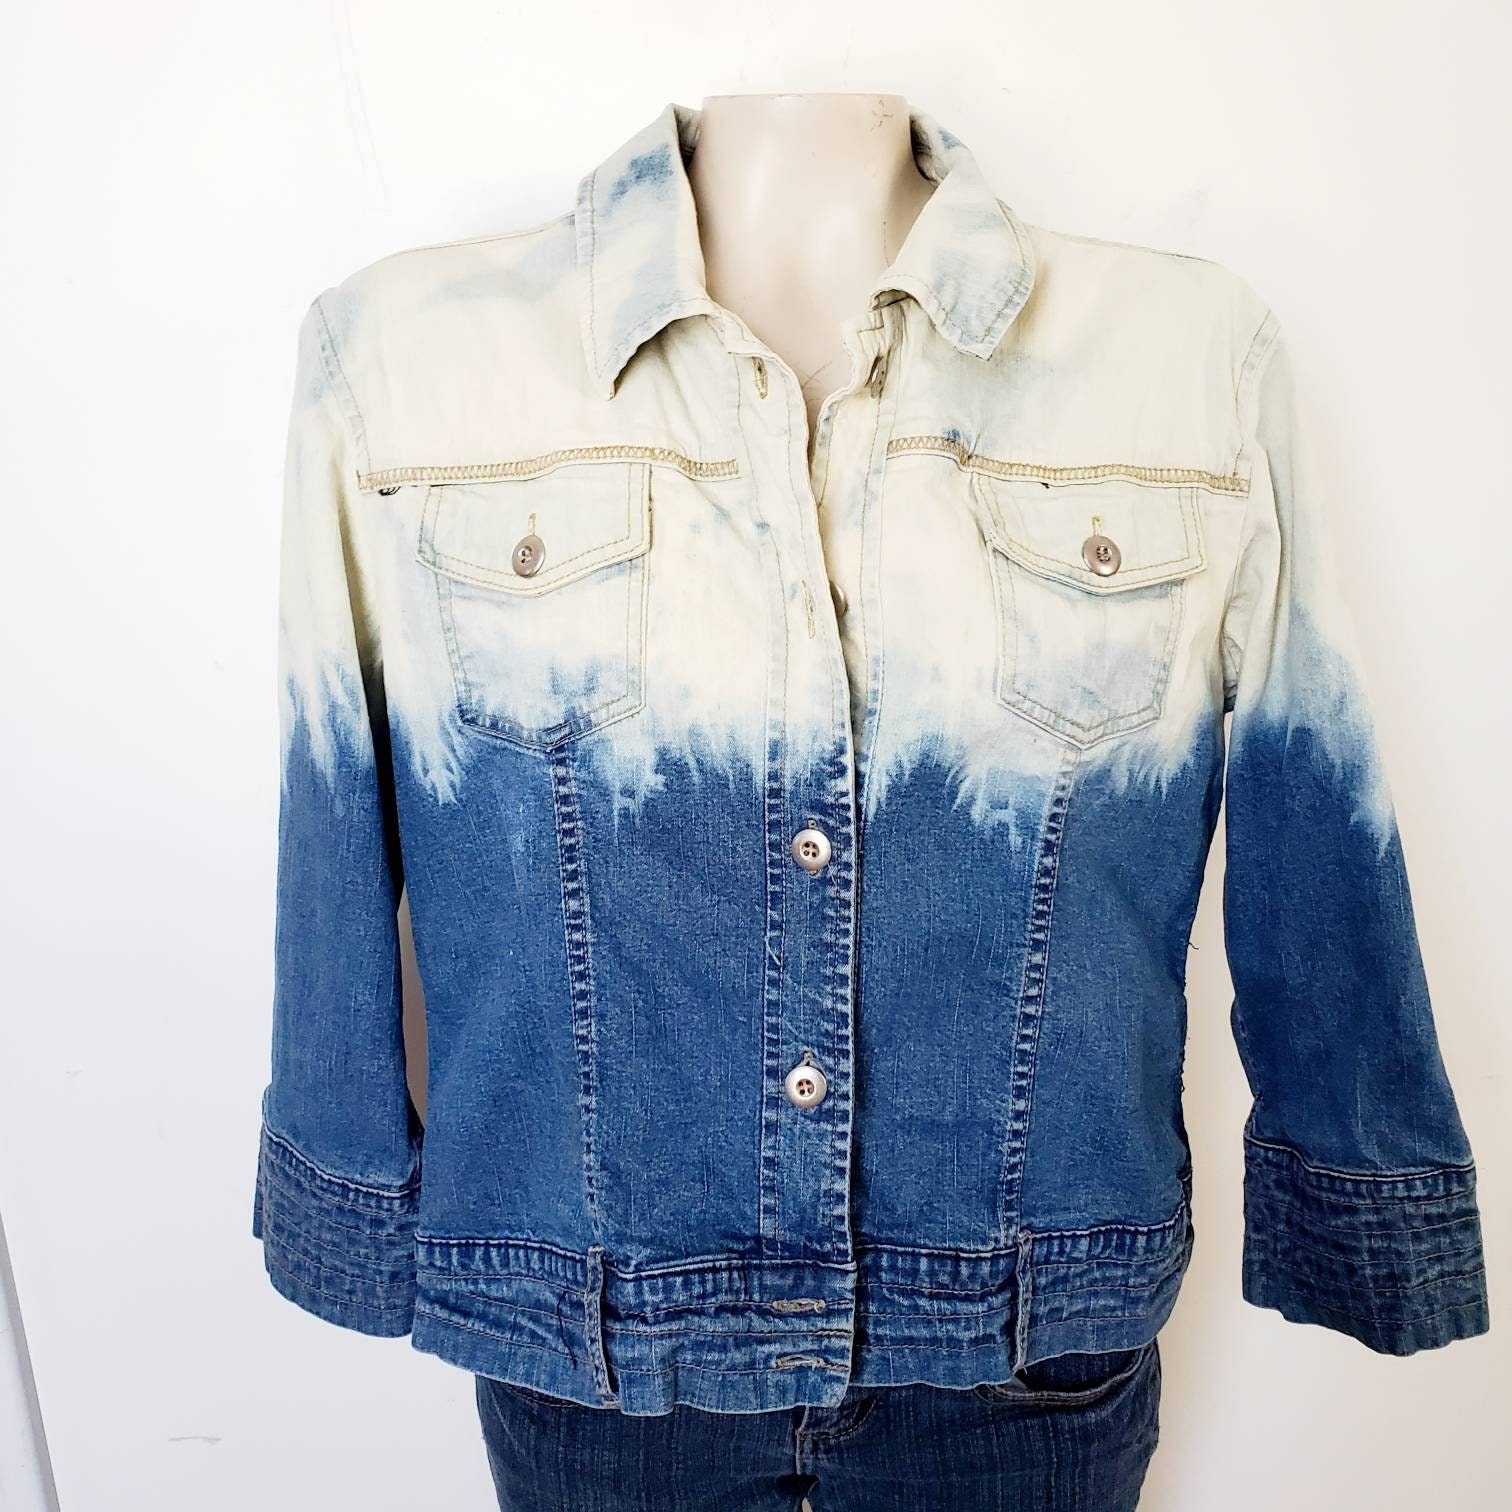 Adult Bleach Dye Denim Jacket – To Tie-Dye for Clothing